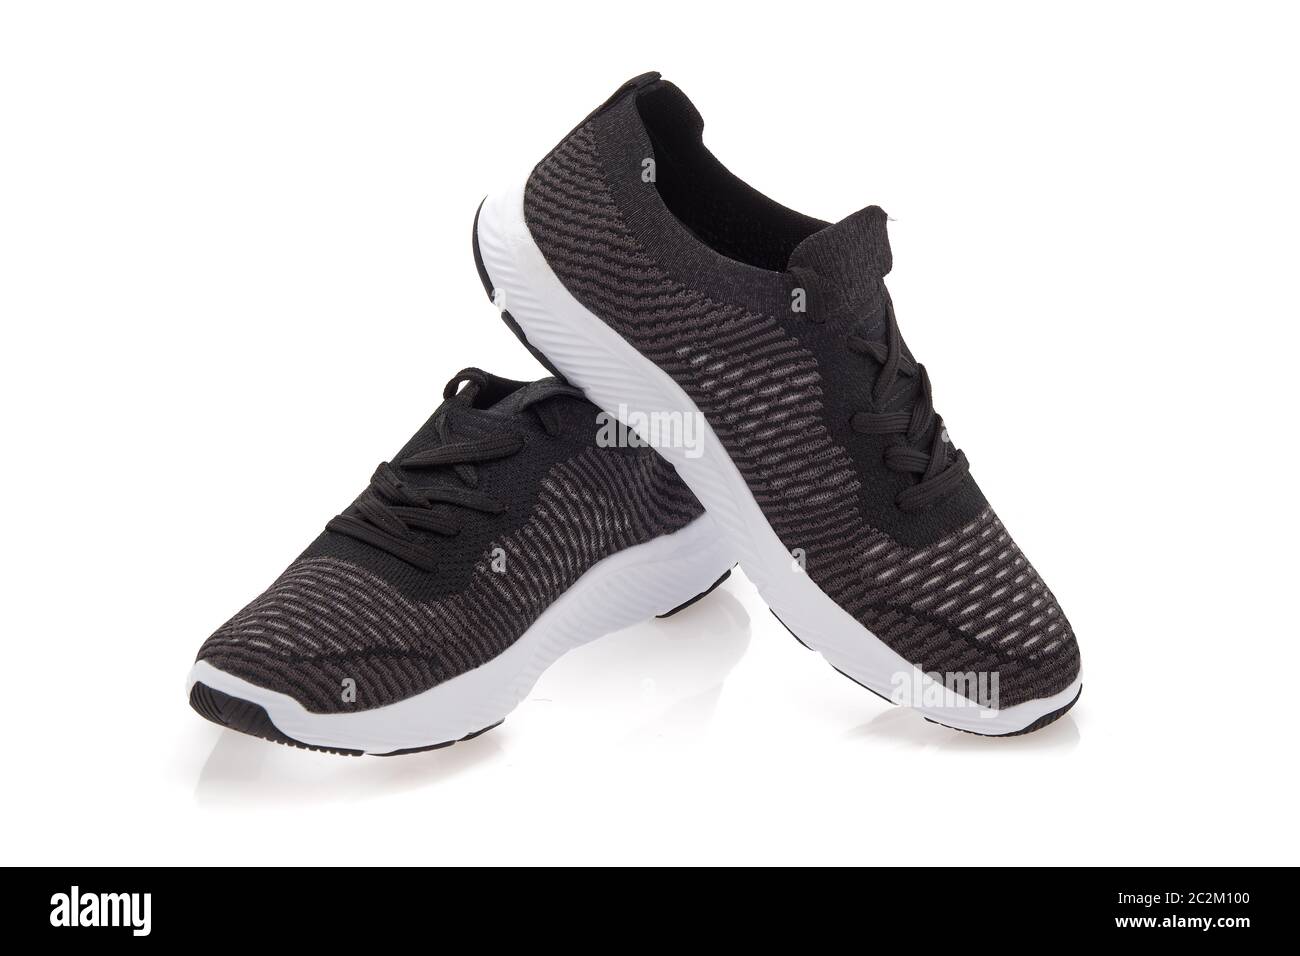 Nuove scarpe da running sportive moderne, sneakers o scarpe da ginnastica  isolate su sfondo bianco Foto stock - Alamy